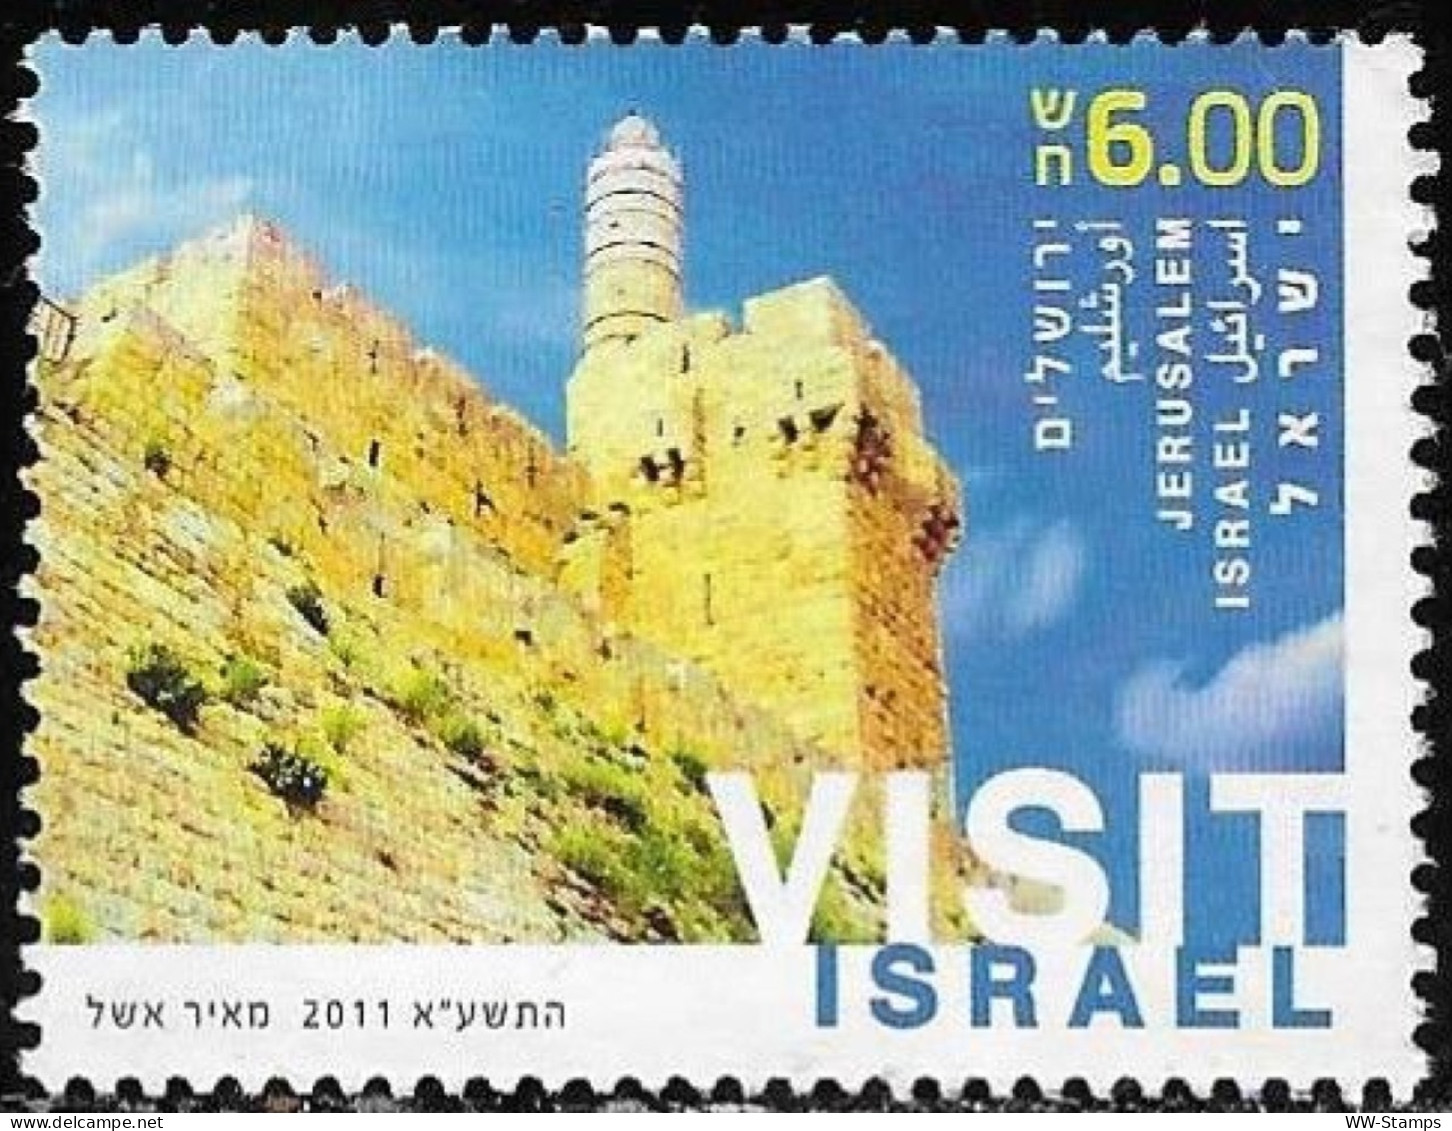 Israel 2011 Used Stamp Tourism Visit Israel Tower Of David [INLT14] - Usados (sin Tab)